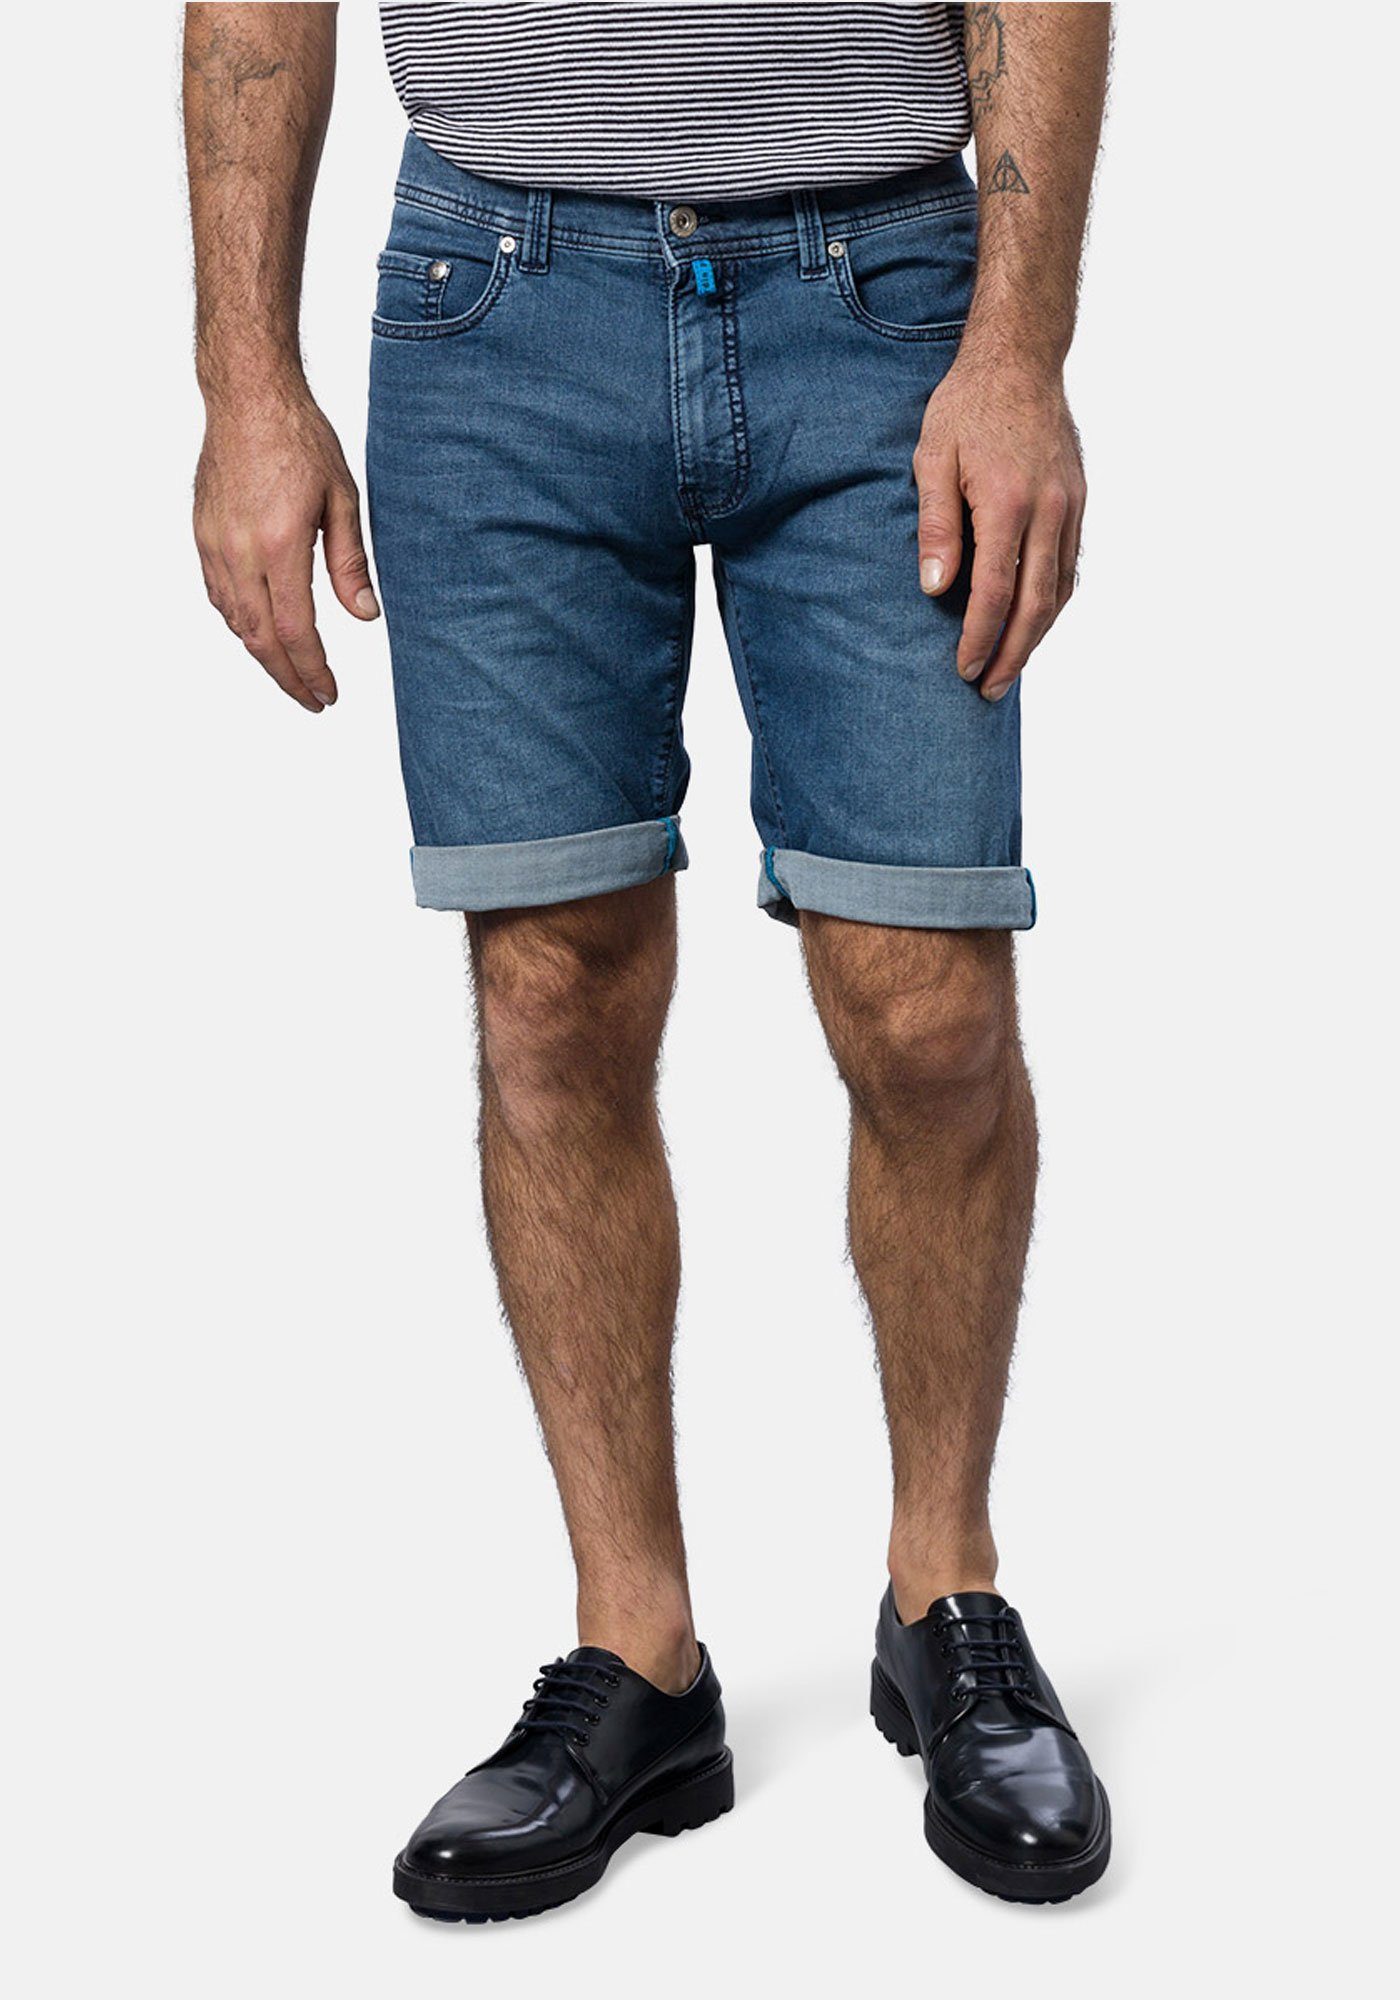 Pierre Cardin Jeansbermudas Lyon 5-Pocket Futureflex Denim Jeans Shorts Authentic Blue Used